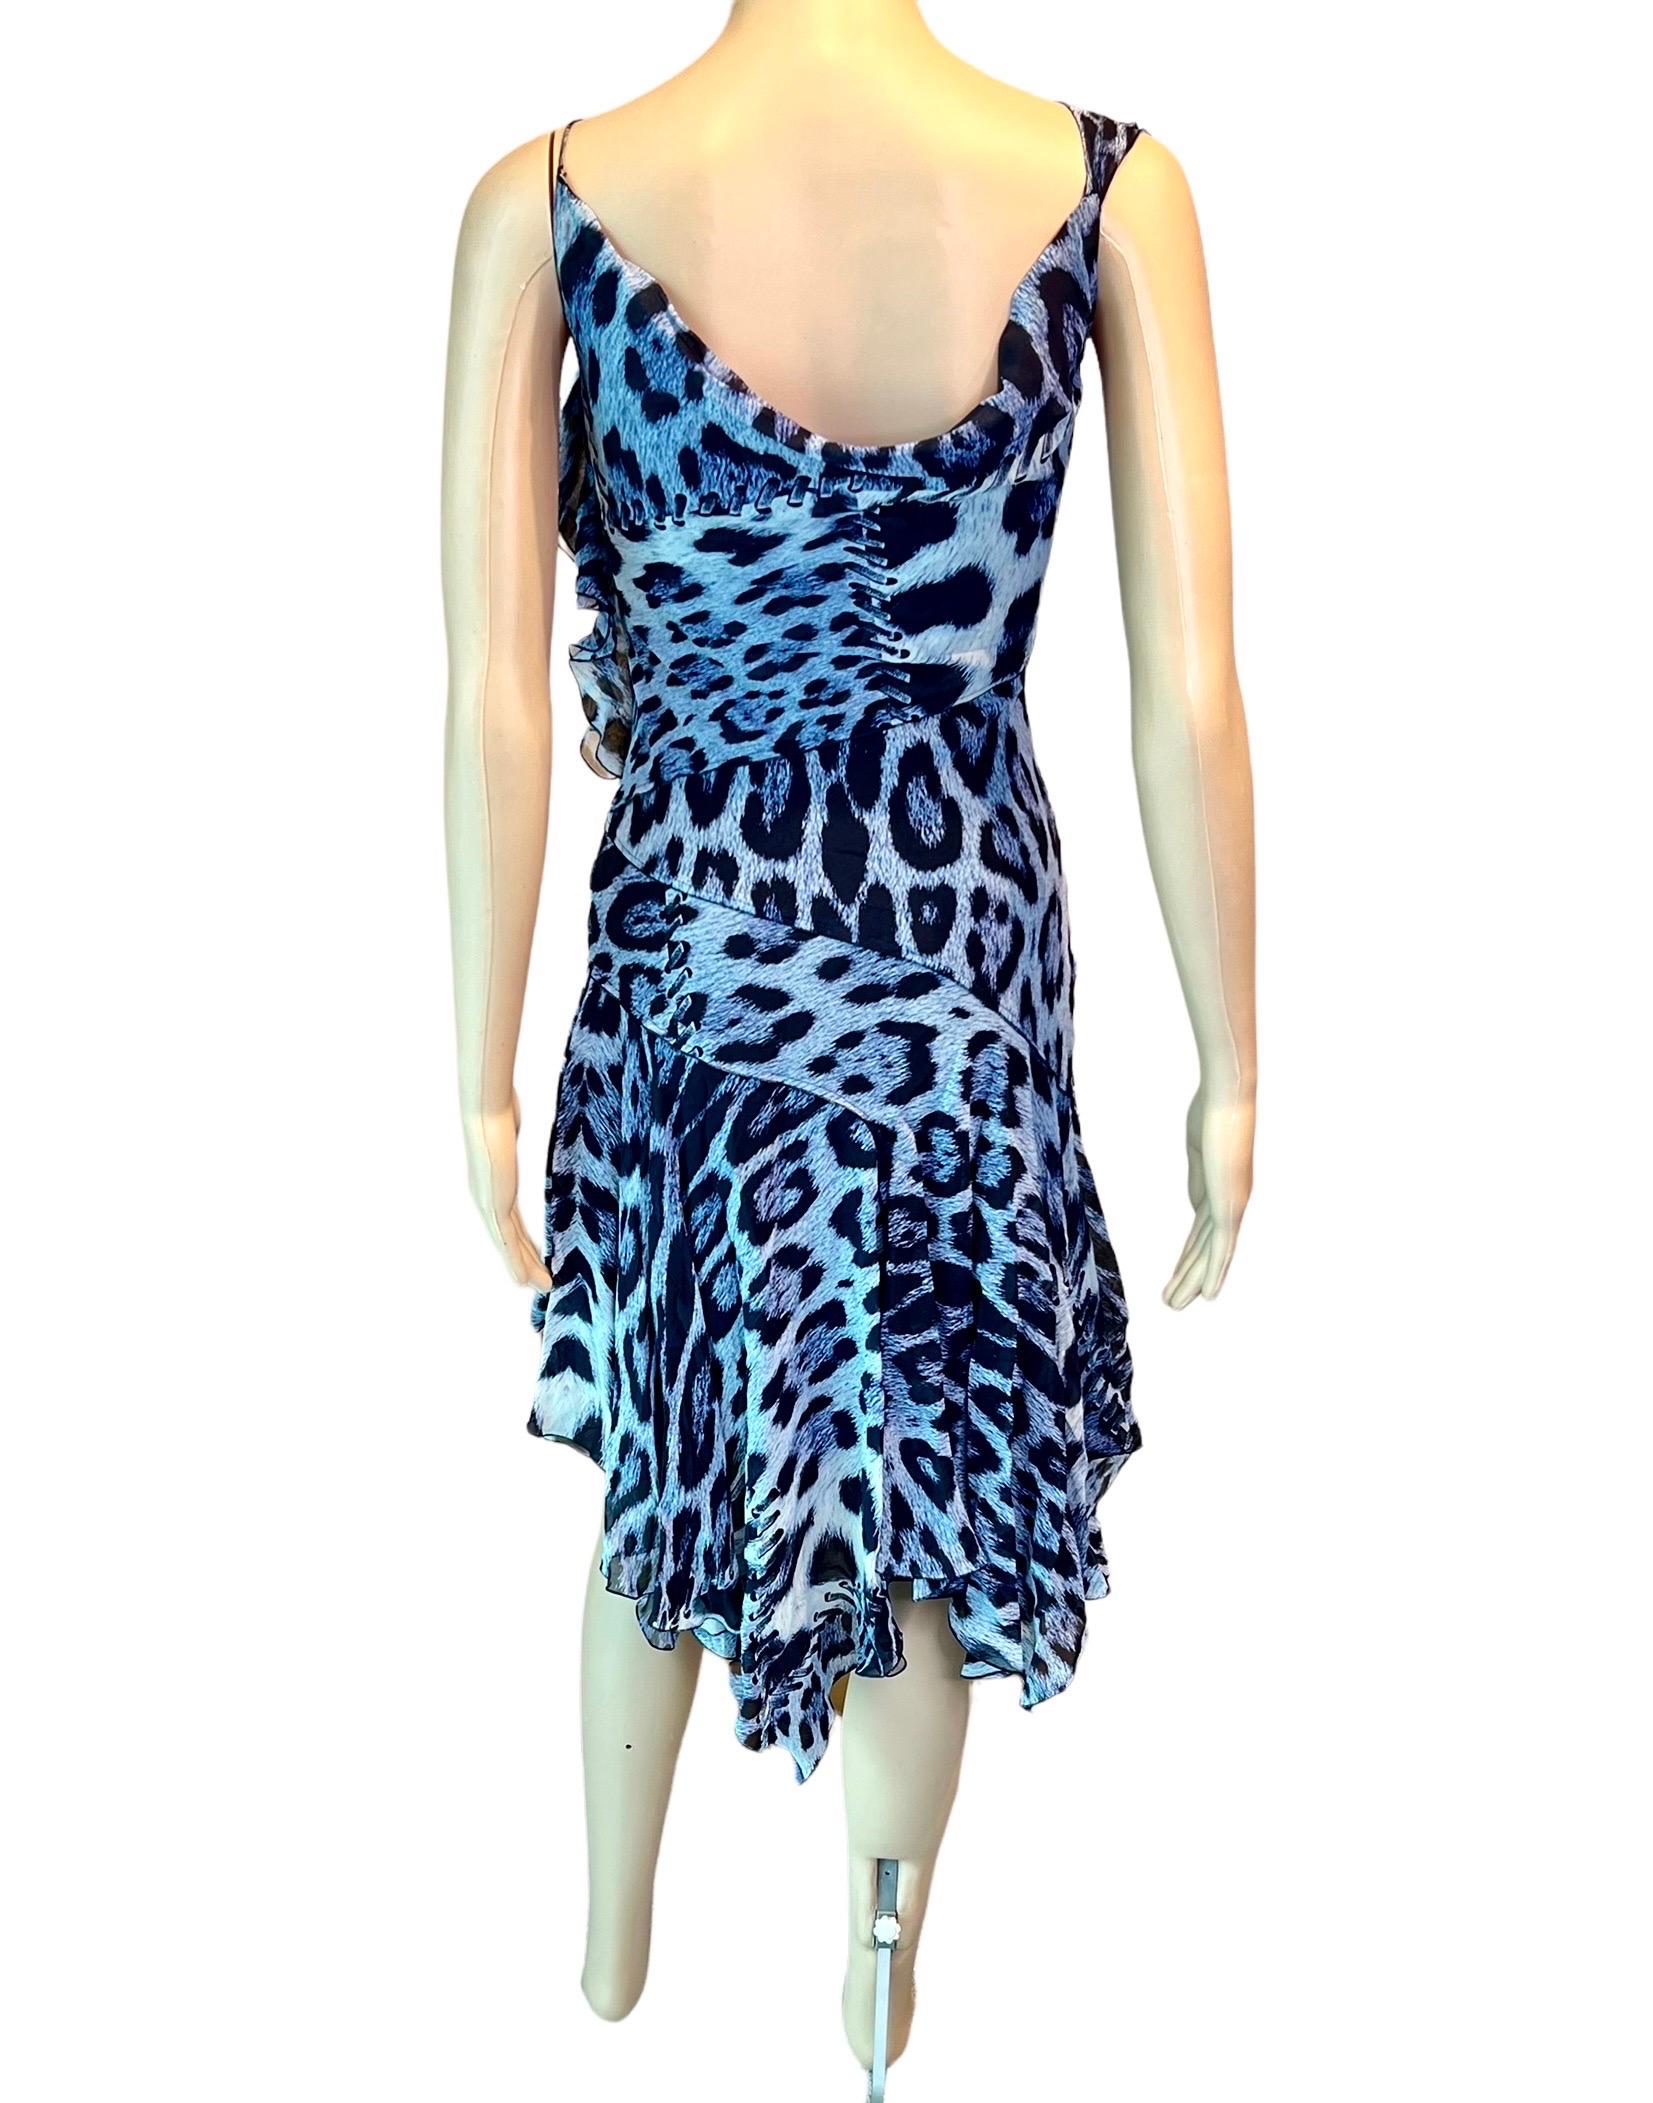 Roberto Cavalli S/S 2011 Silk Bias Cut Asymmetrical Animal Print Slip Dress  For Sale 2